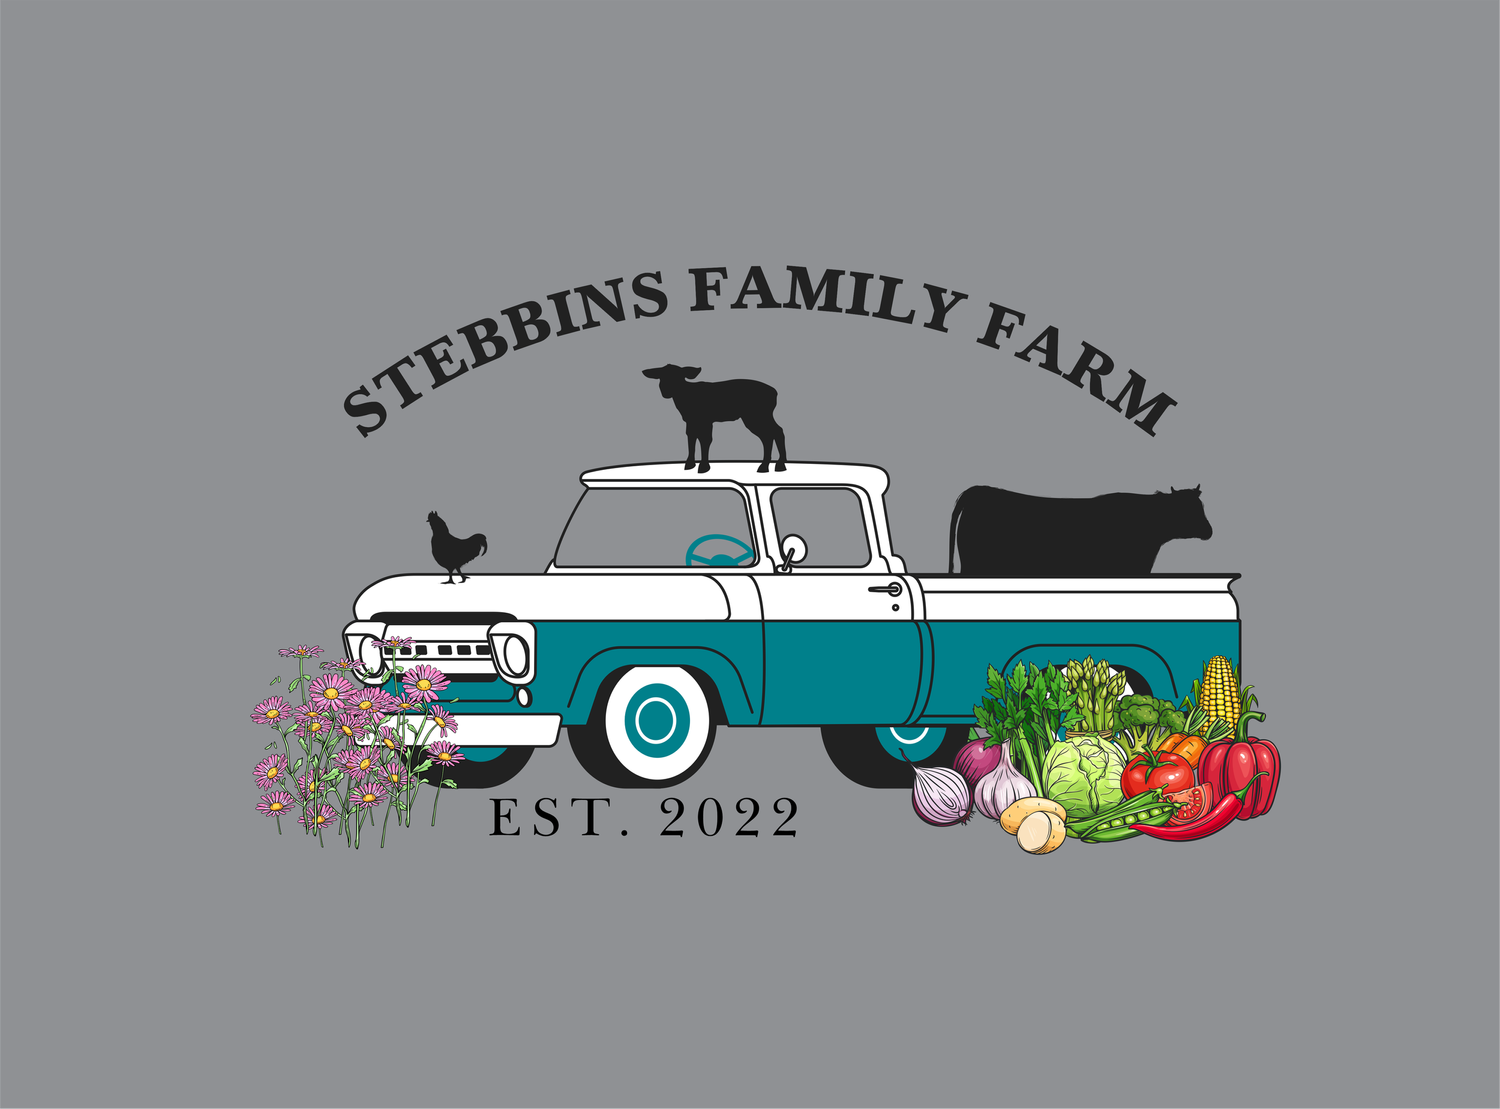 Stebbins Family Farm